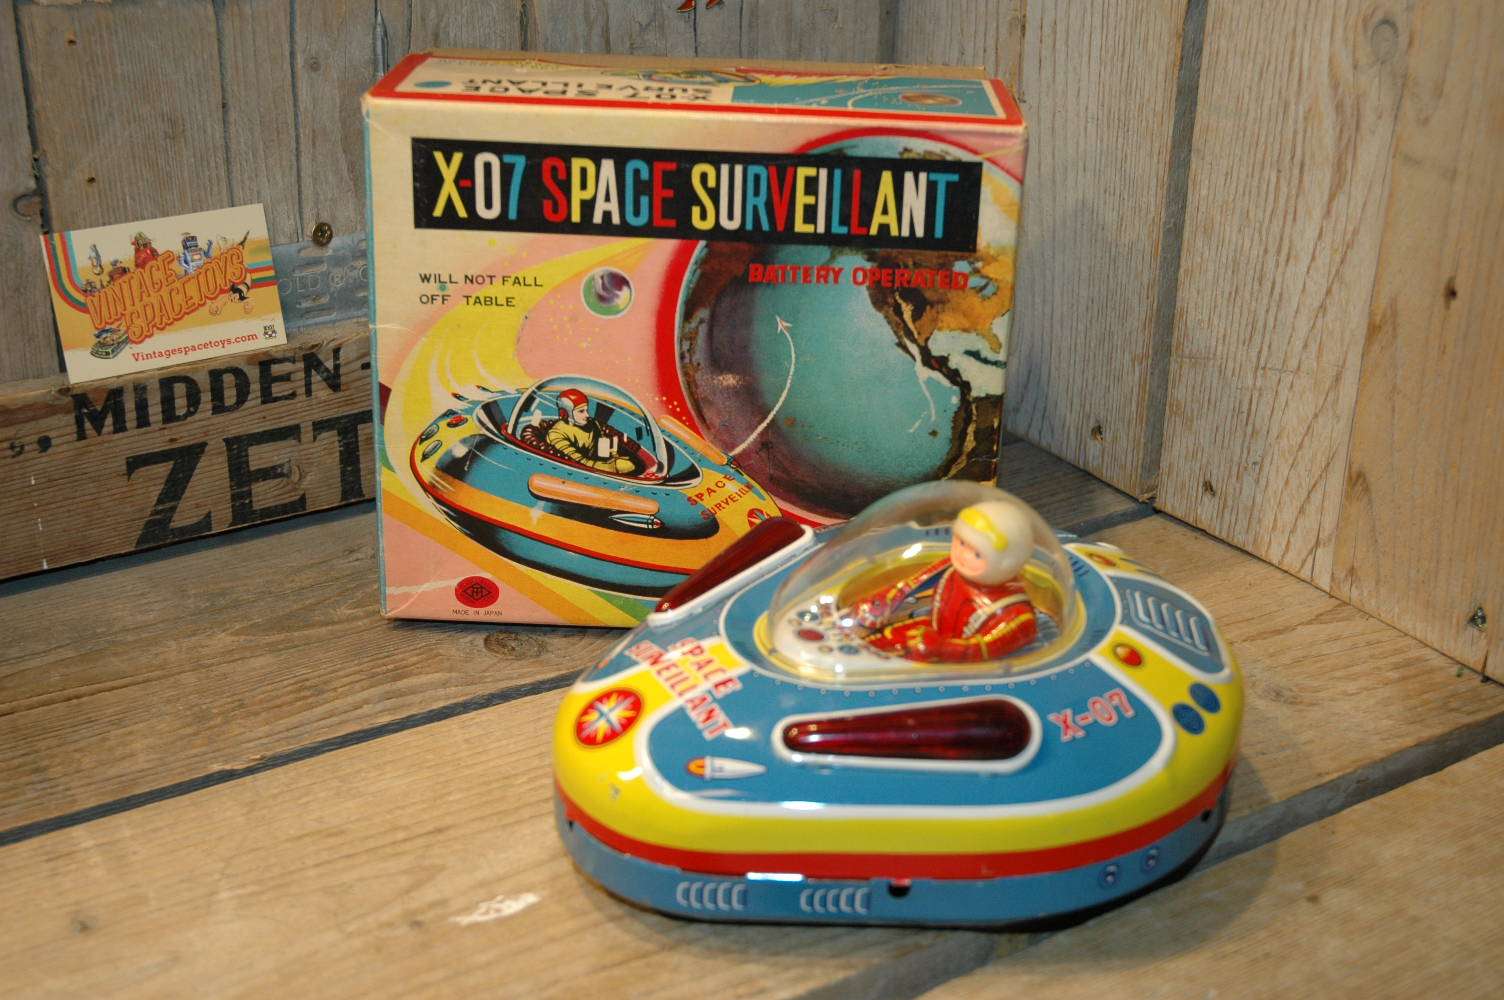 Modern Toys - X-07 Space Surveillant